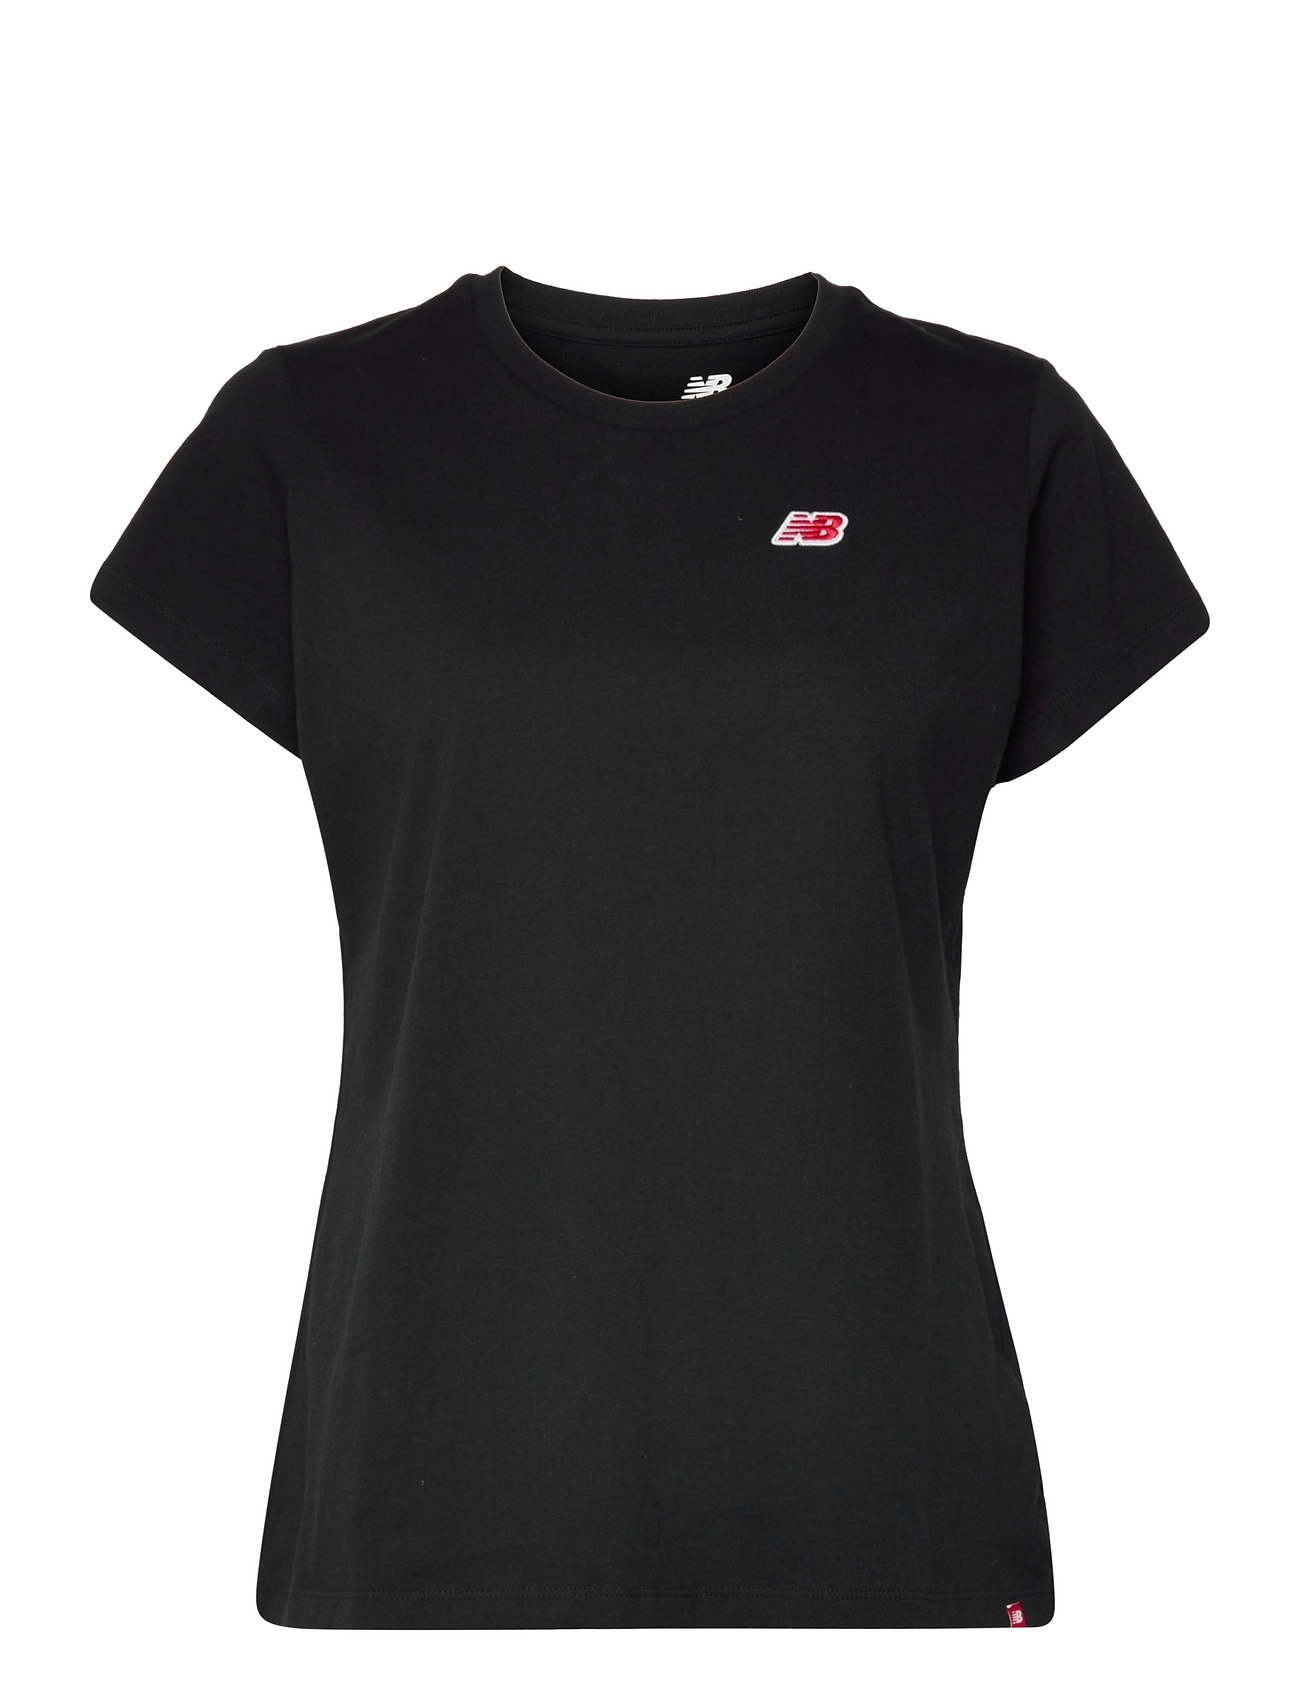 Nb Essentials Small Nb Pack Tee T-shirts & Tops Short-sleeved Svart New Balance